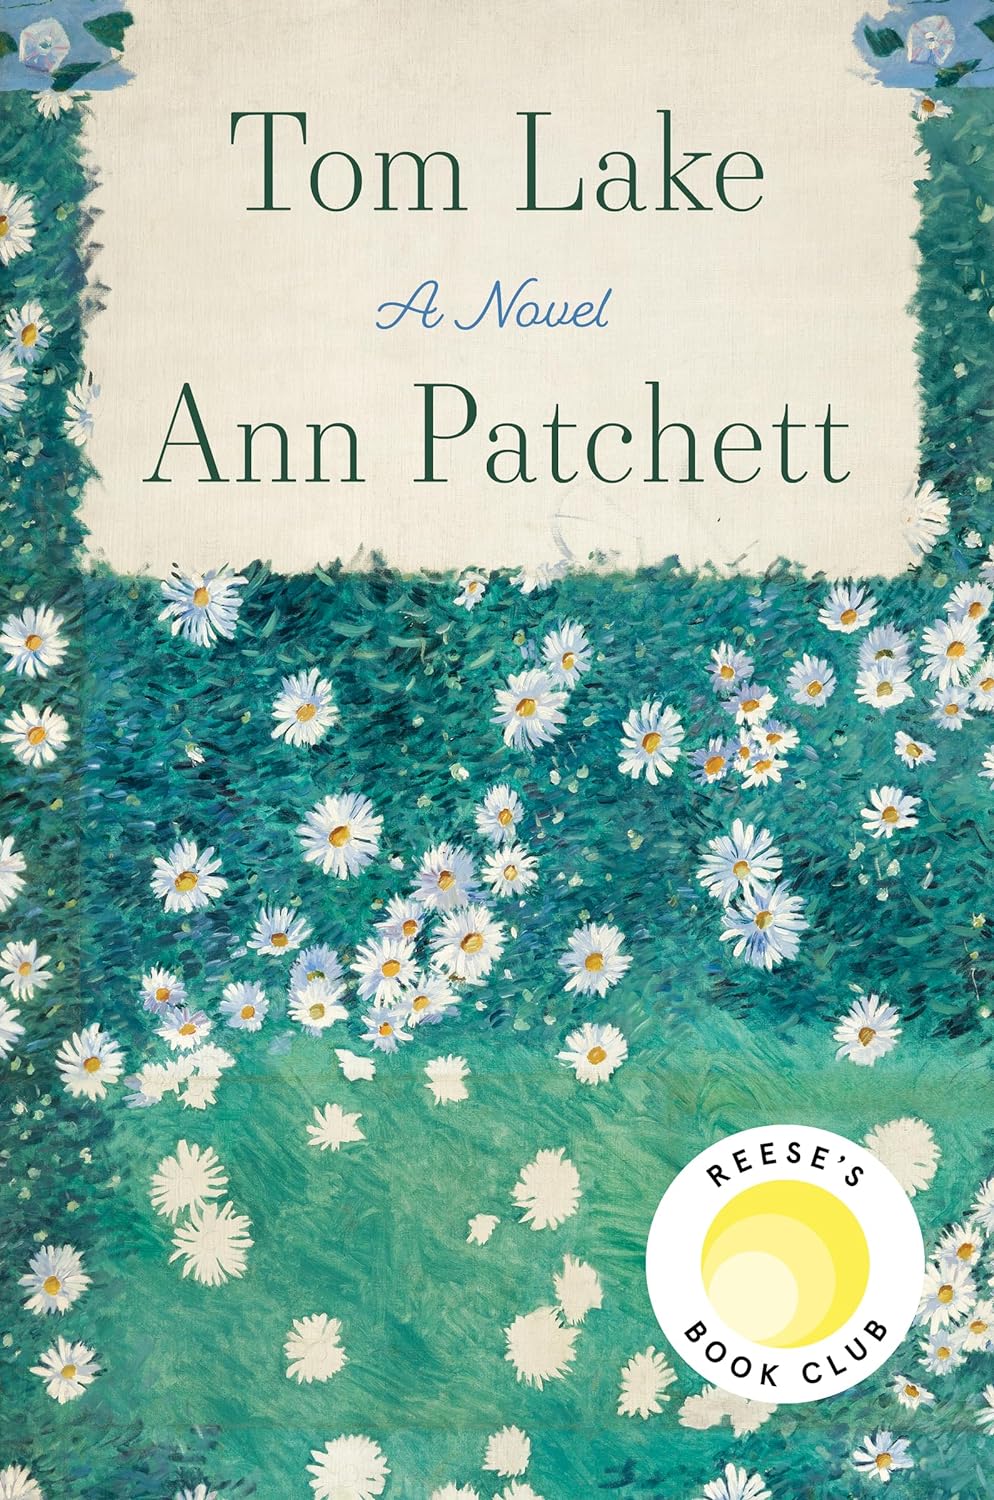 Best Fiction: Tom Lake by Ann Patchett